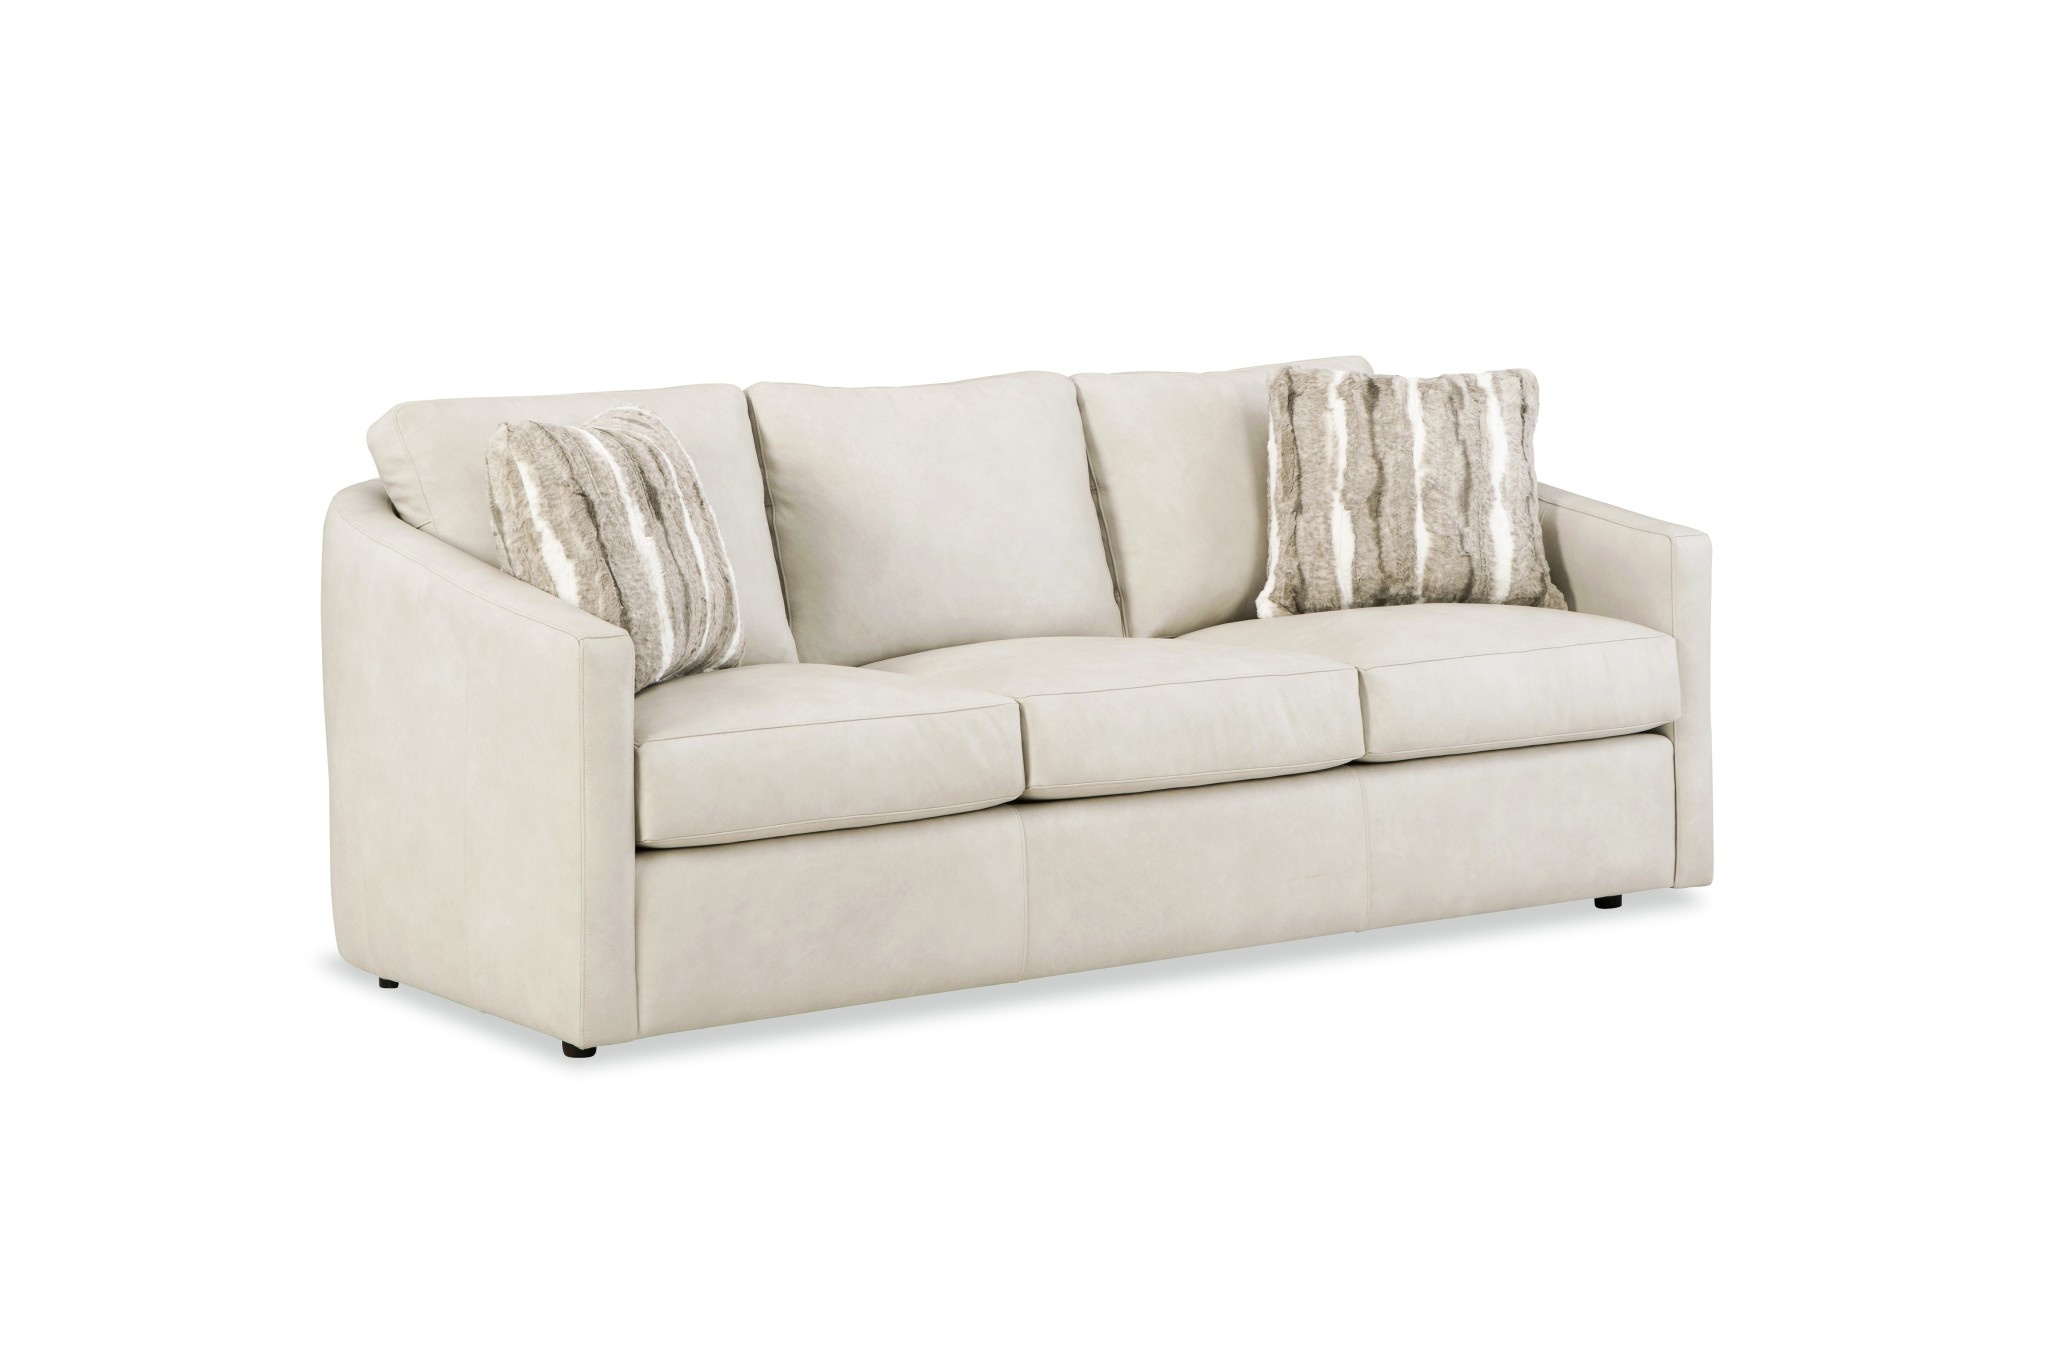 Craftmaster Furniture 7168 Leather Sofa